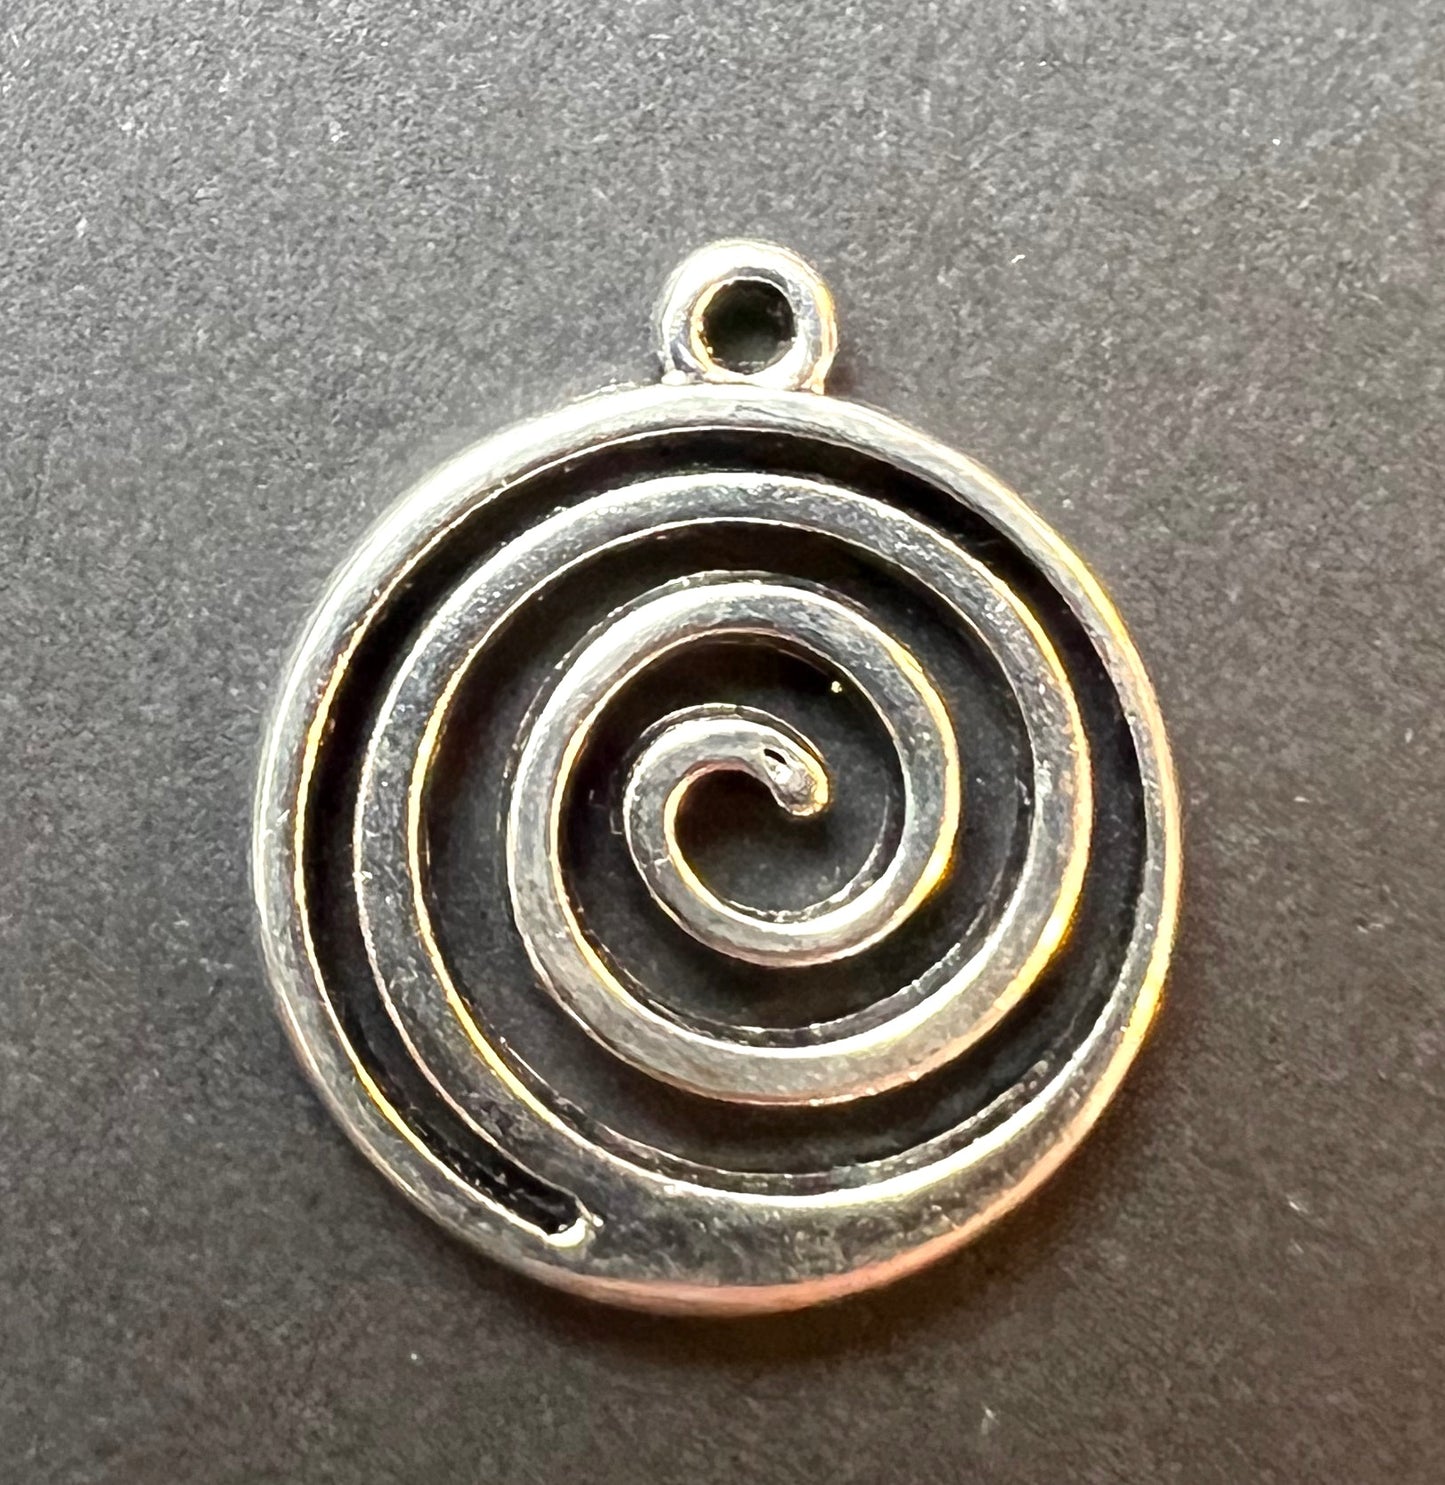 1.8cm Swirl Charm / Pendant